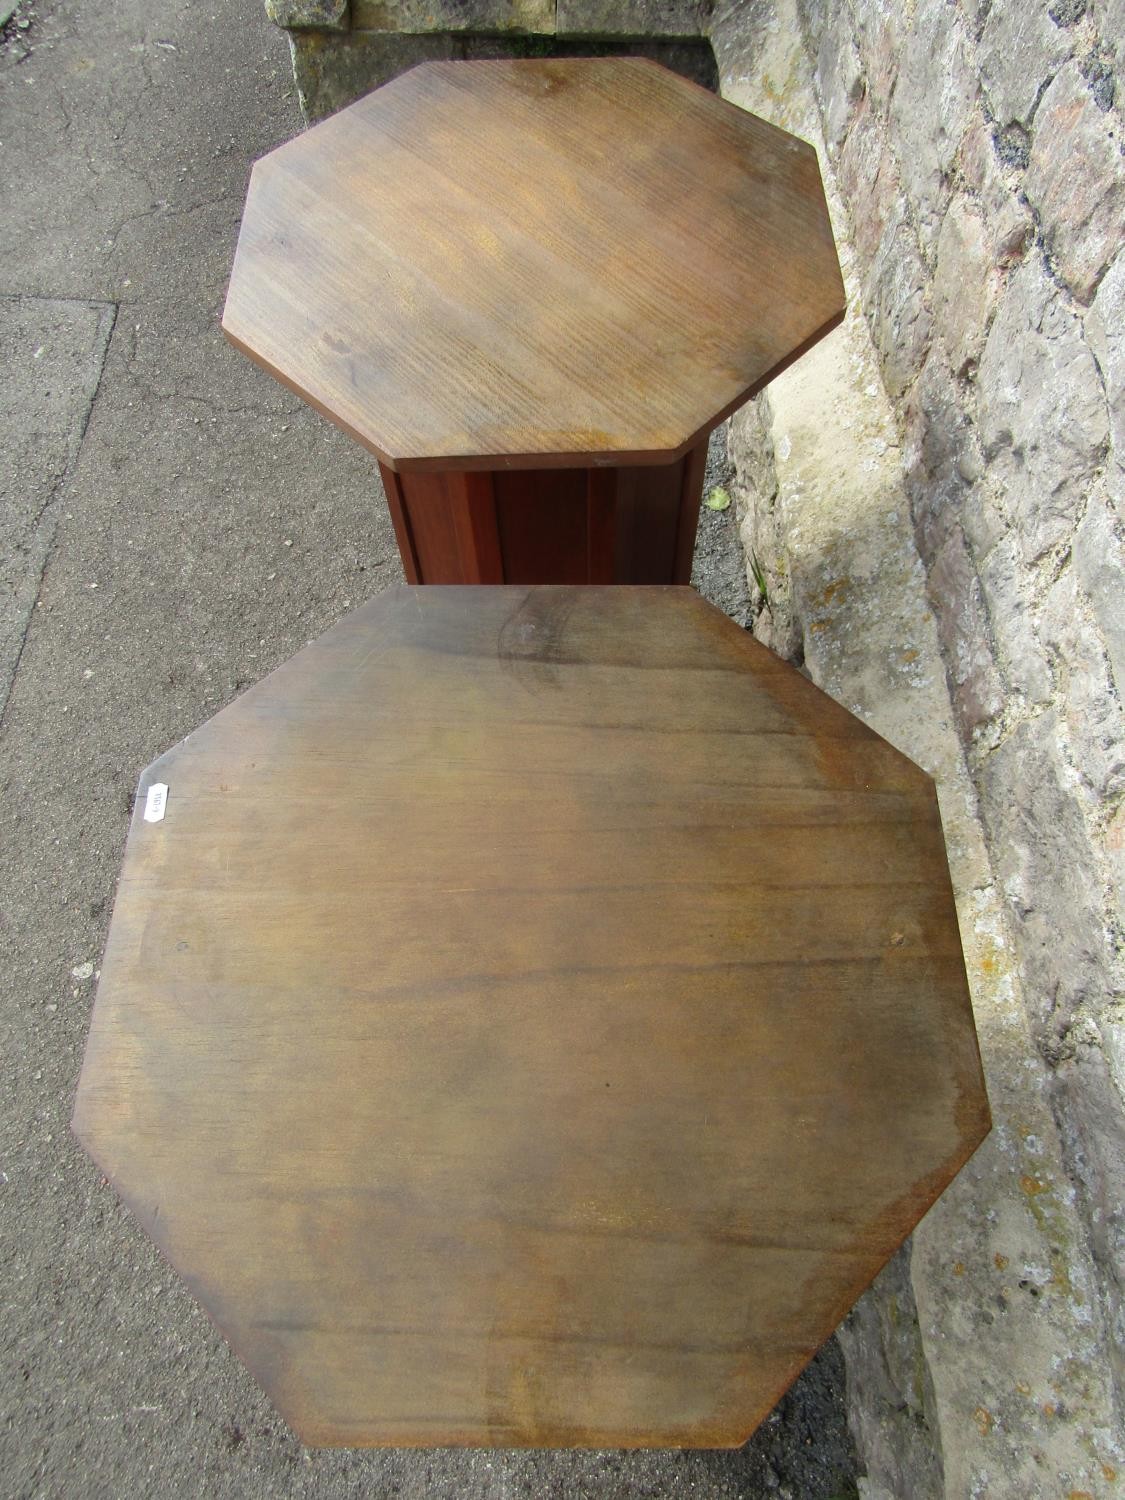 Pair of octagonal pedestals in pine, 75cm high - Image 2 of 3